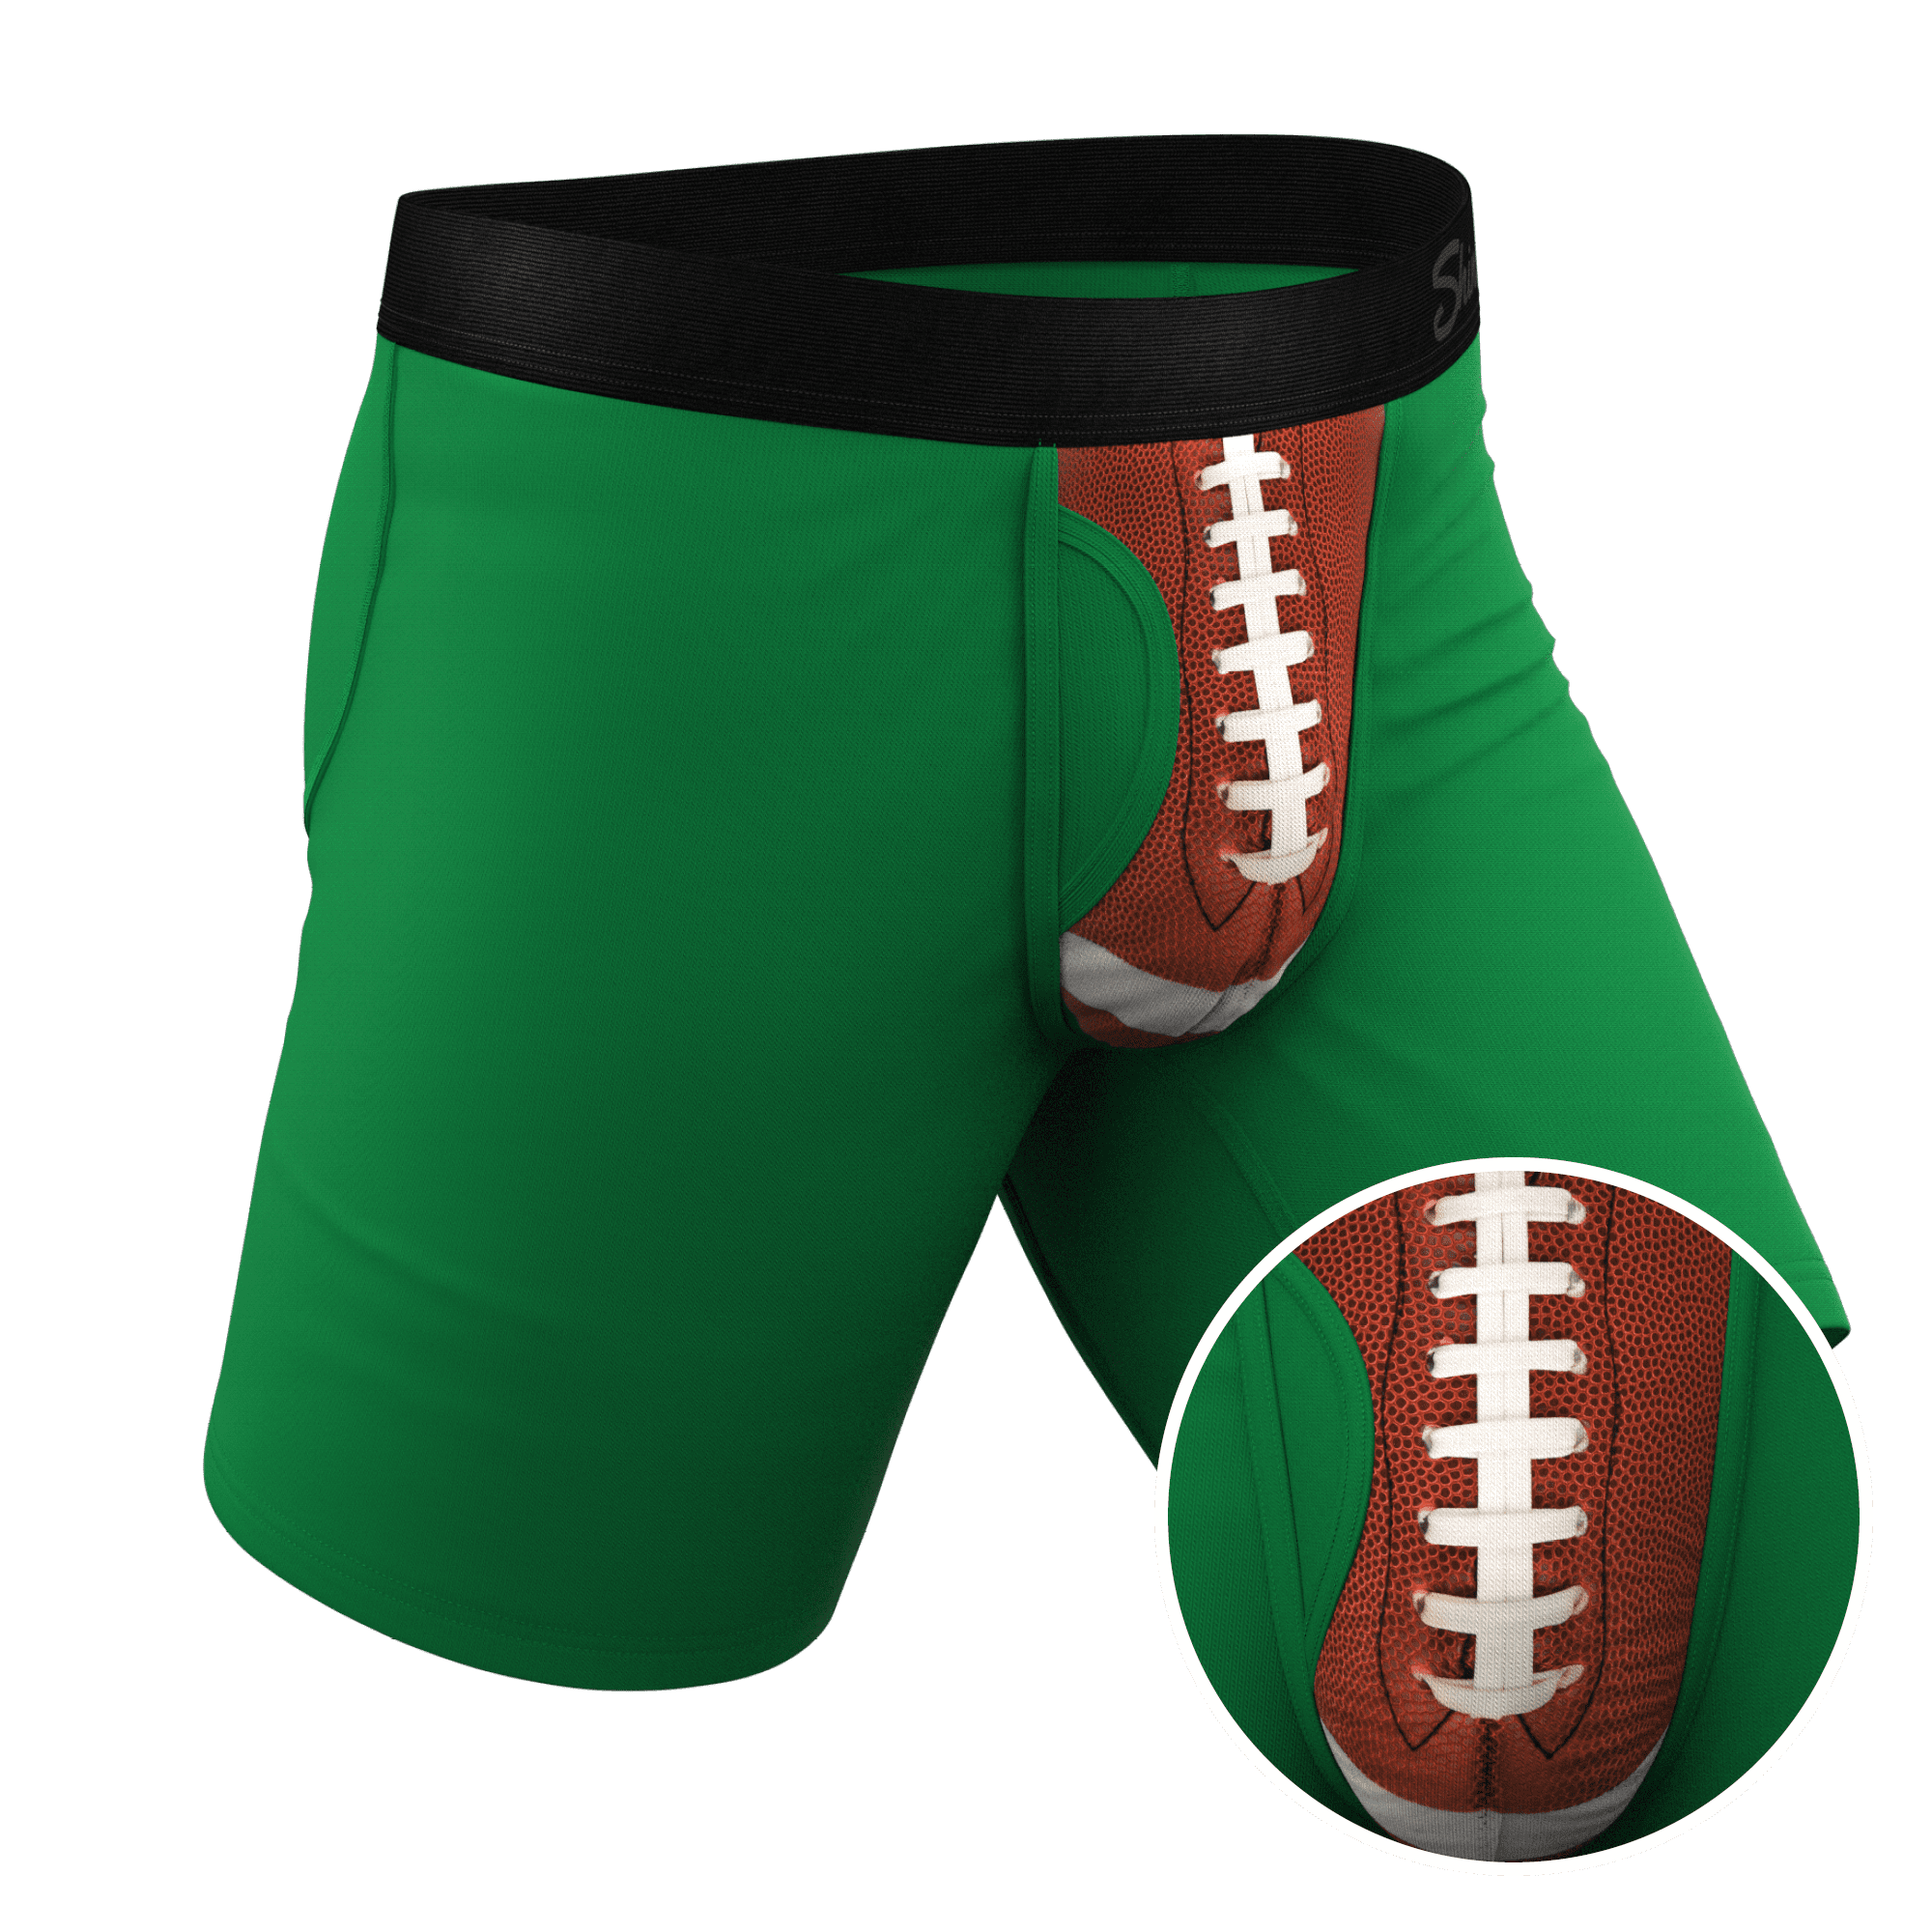 The Mascot - Shinesty American Flag Ball Hammock Pouch Underwear 2X